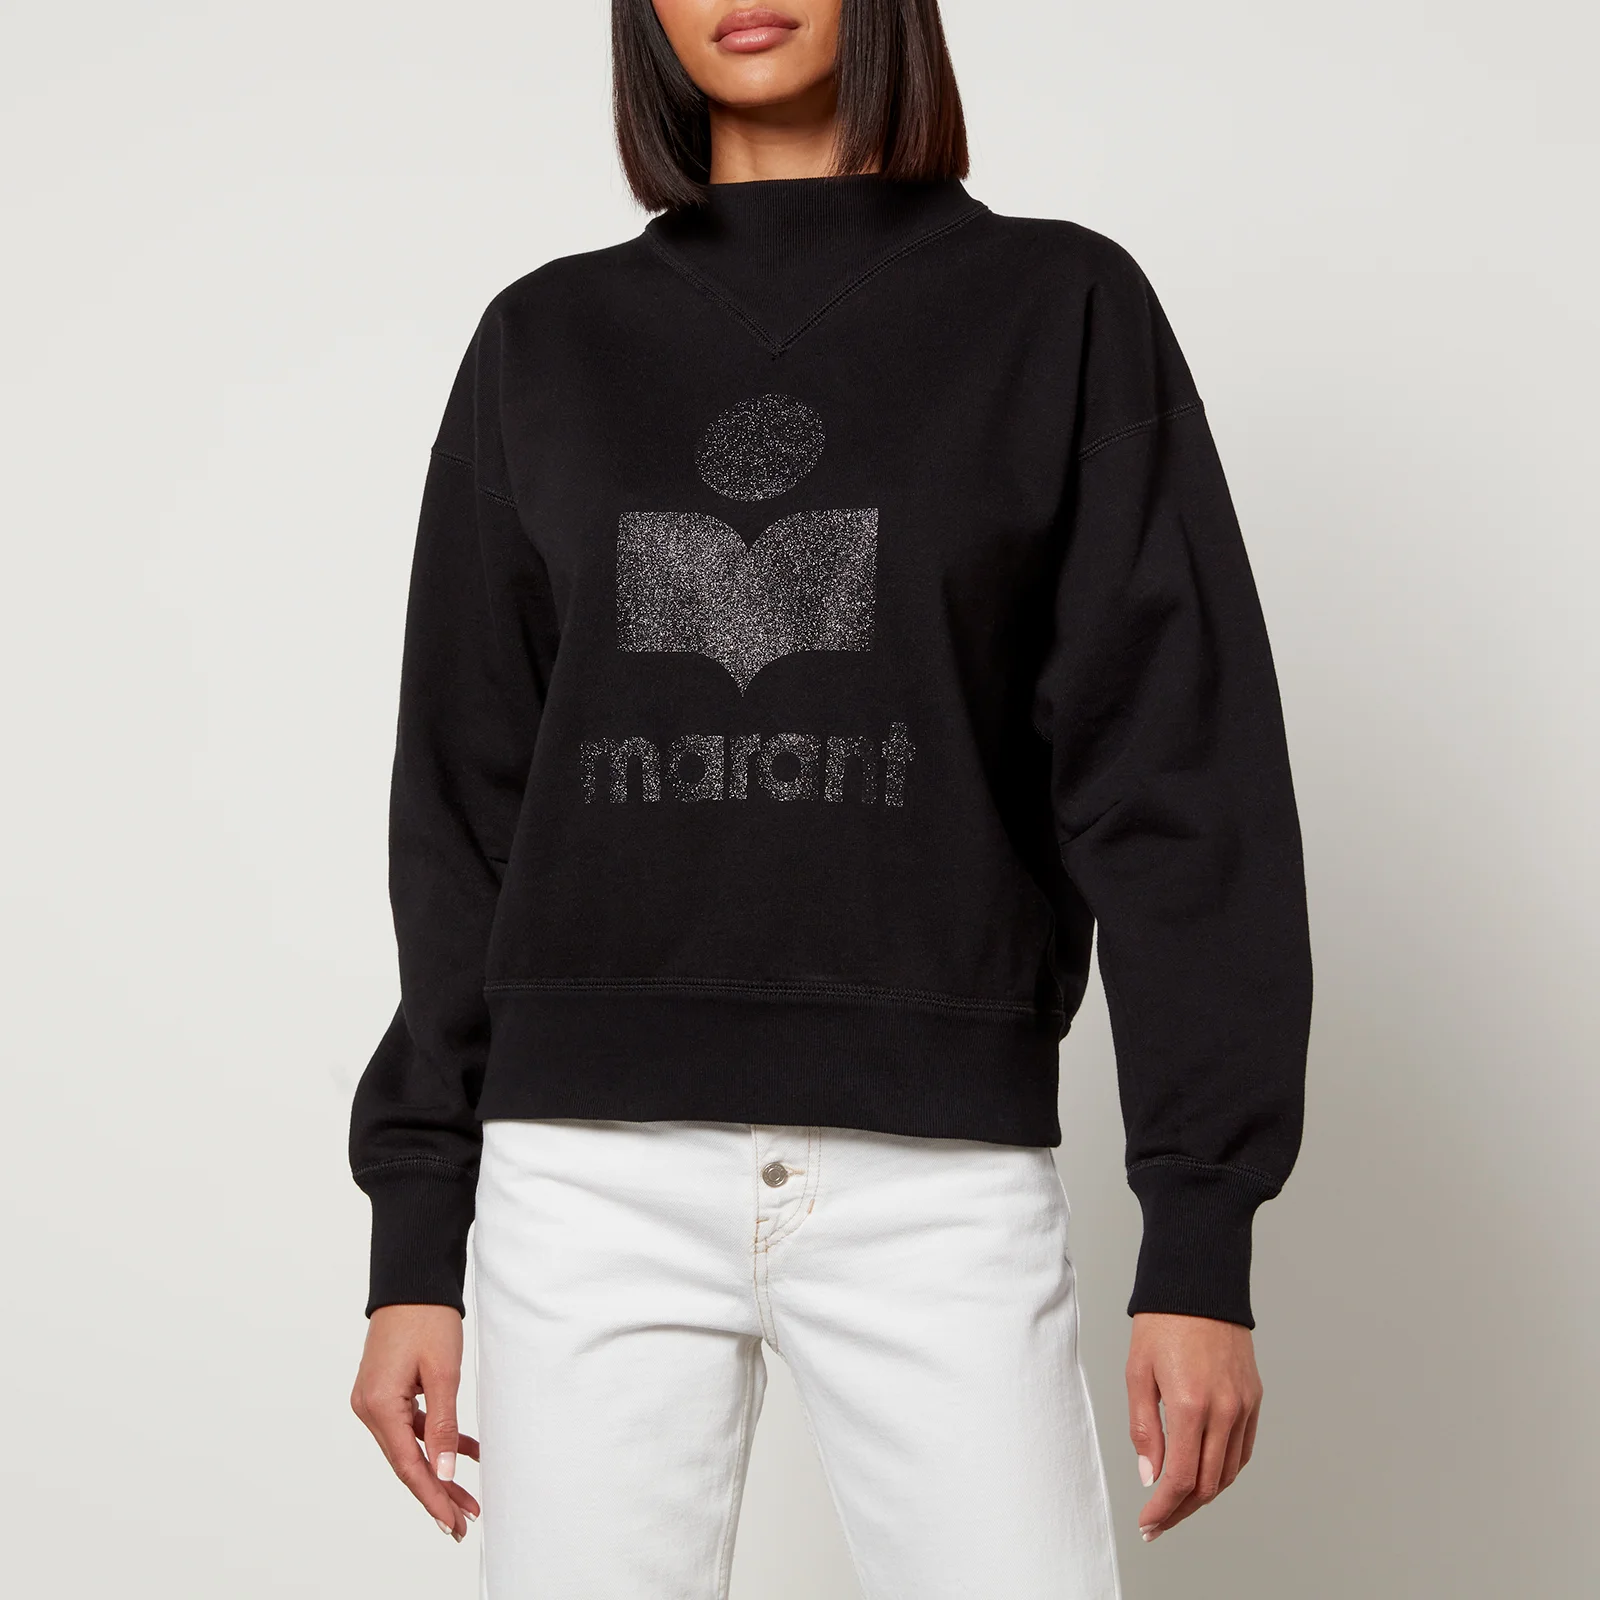 Marant Etoile Moby Logo Cotton-Blend Sweatshirt Image 1